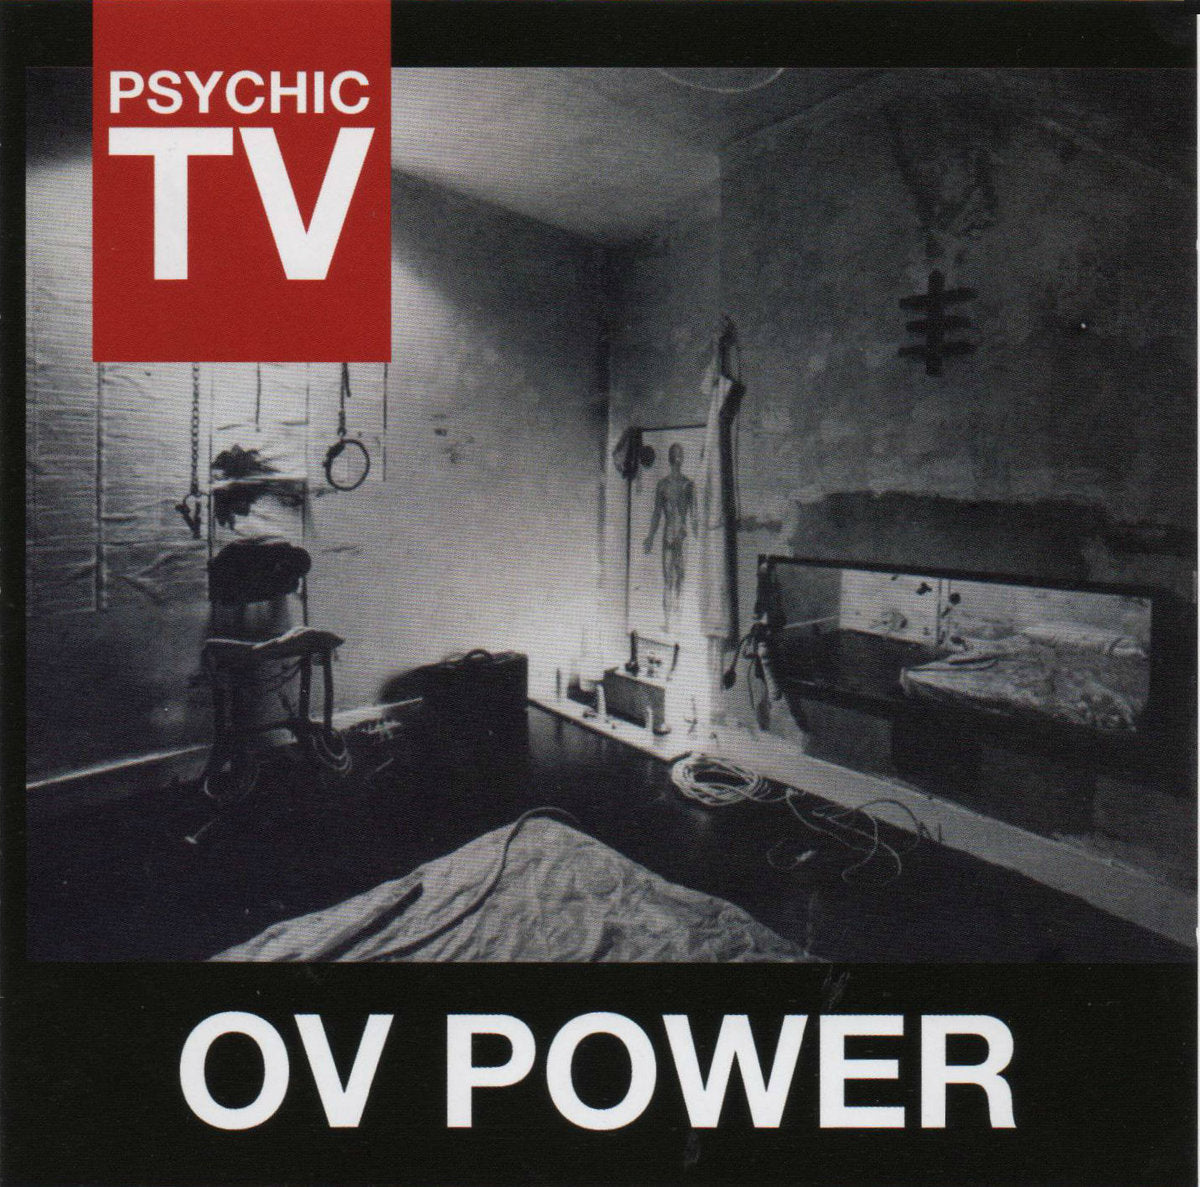 Psychic TV - Ov Power CD